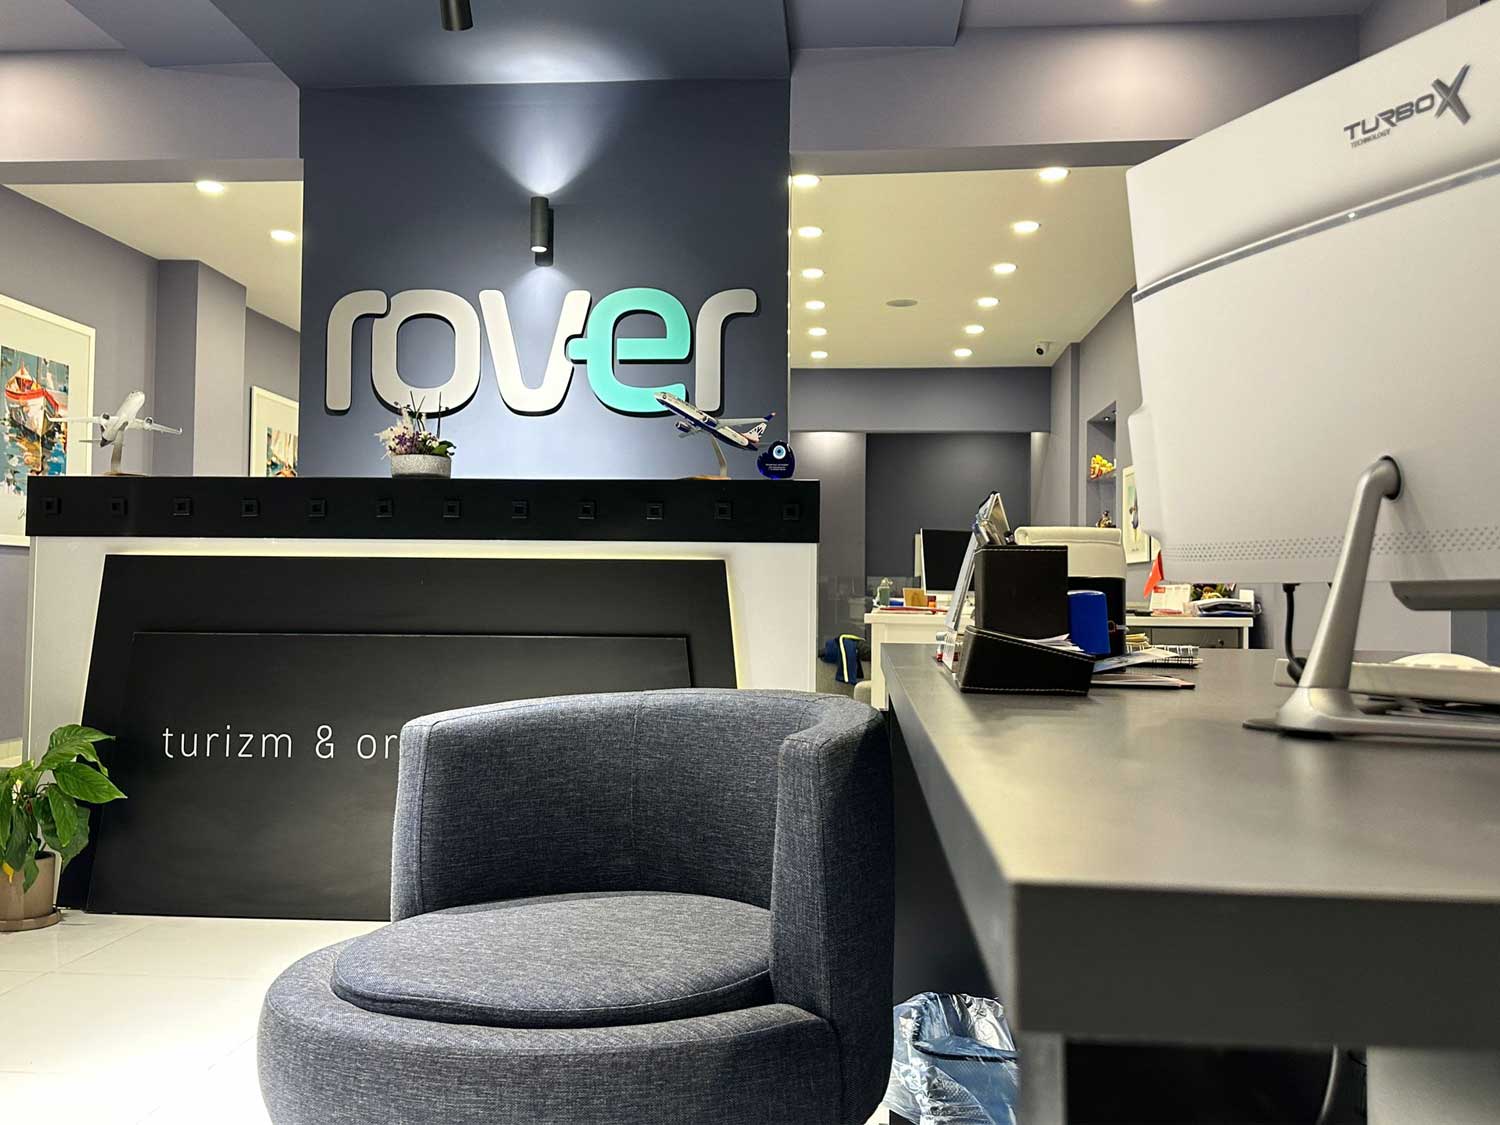 Rover Turizm 3